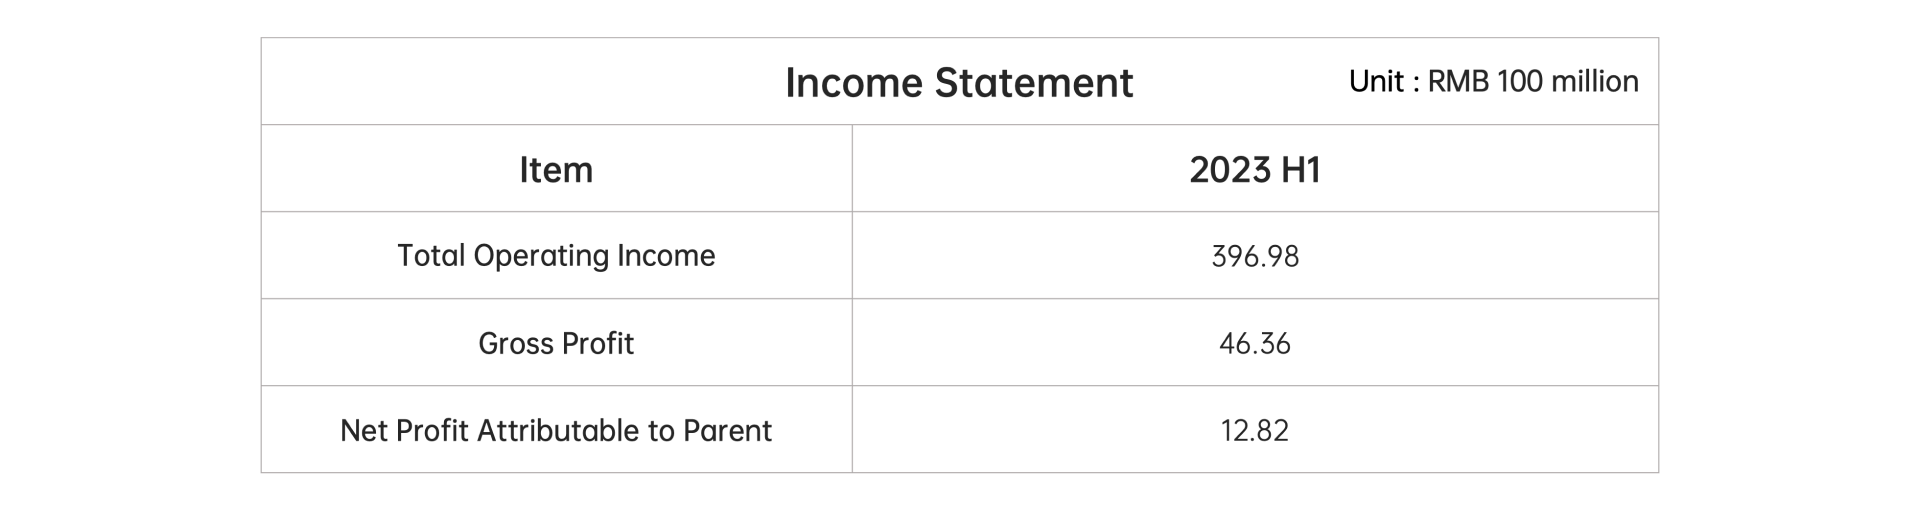 Income Statement Summary